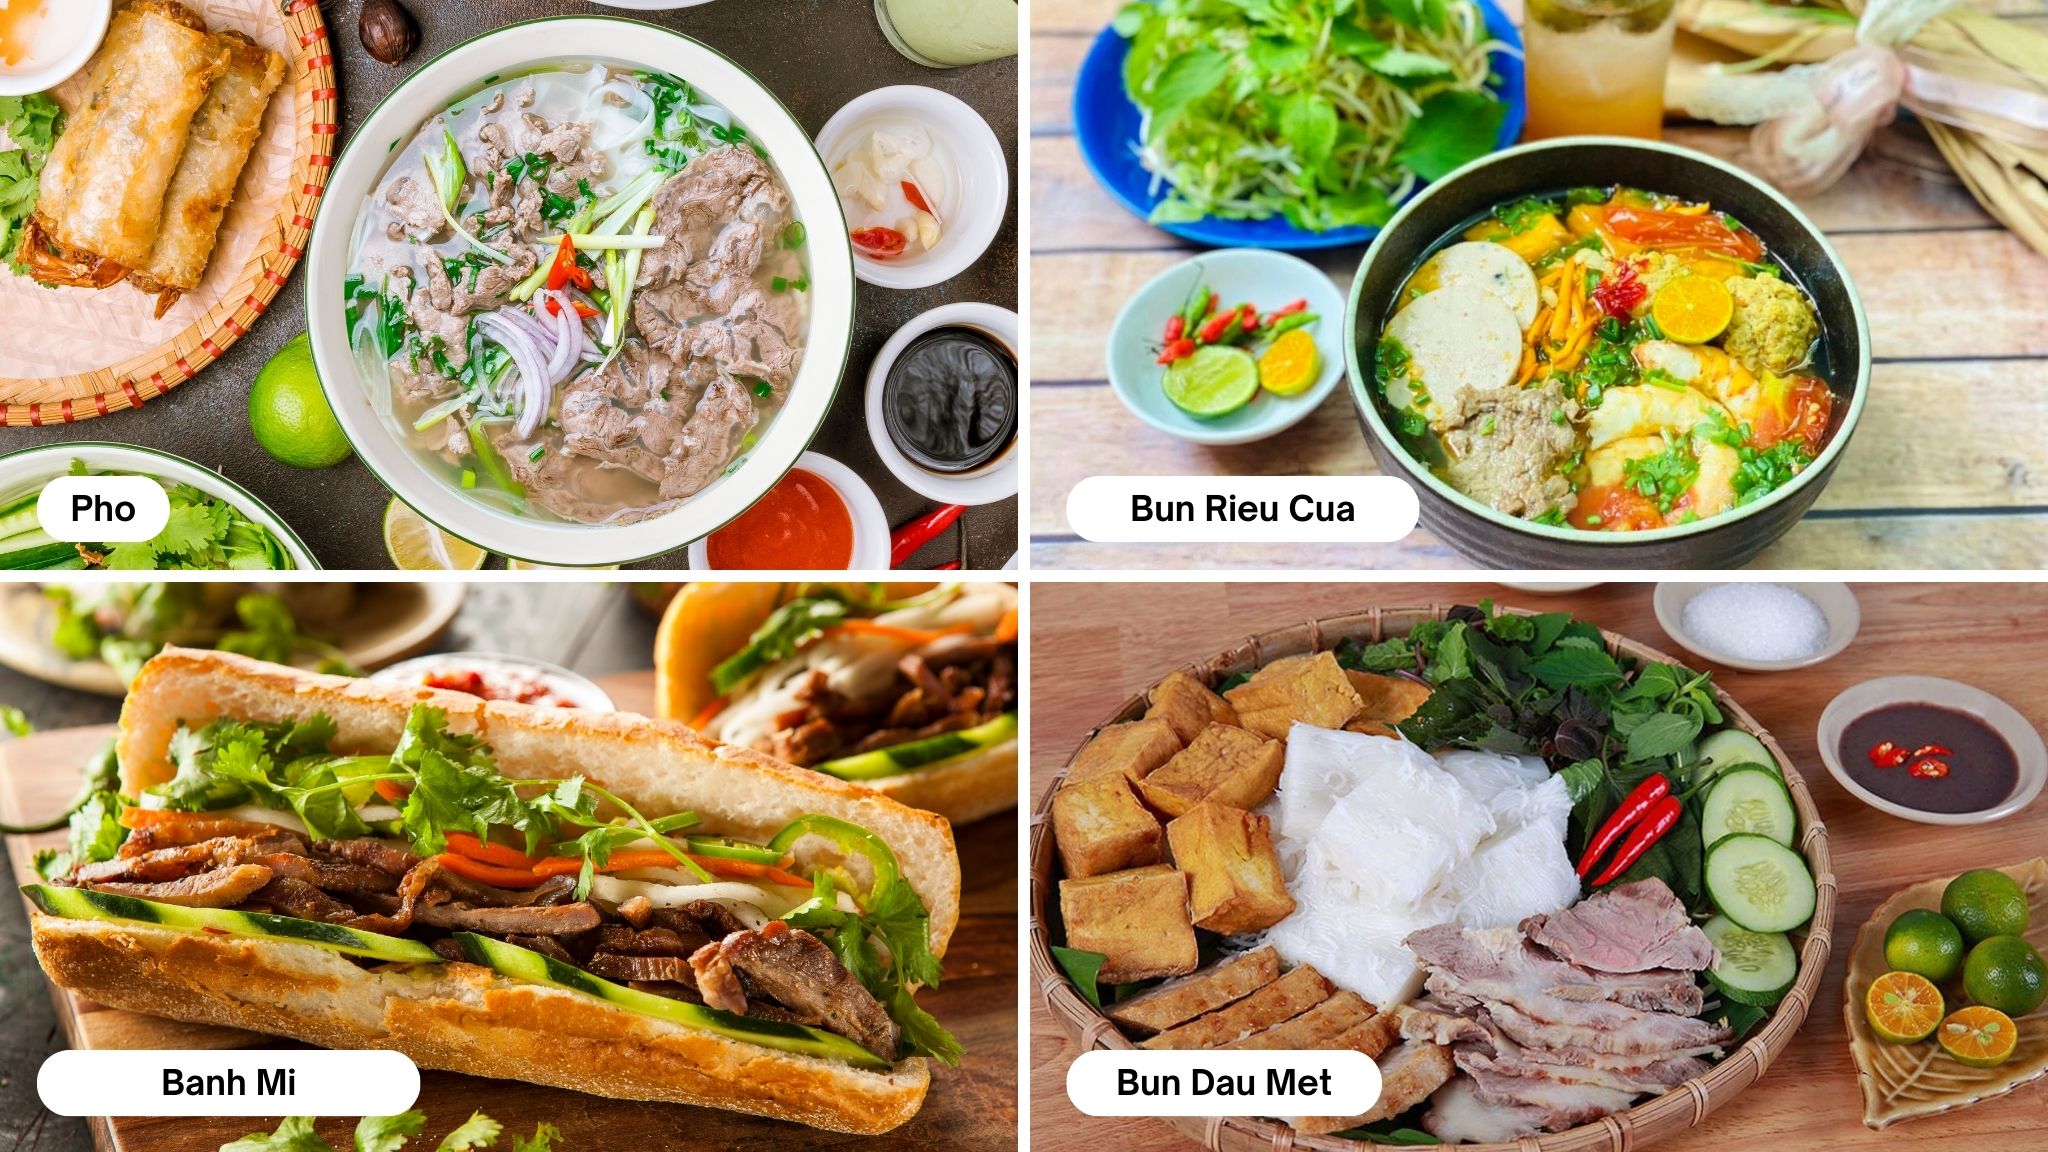 Enjoy Traditional Vietnamese Foods